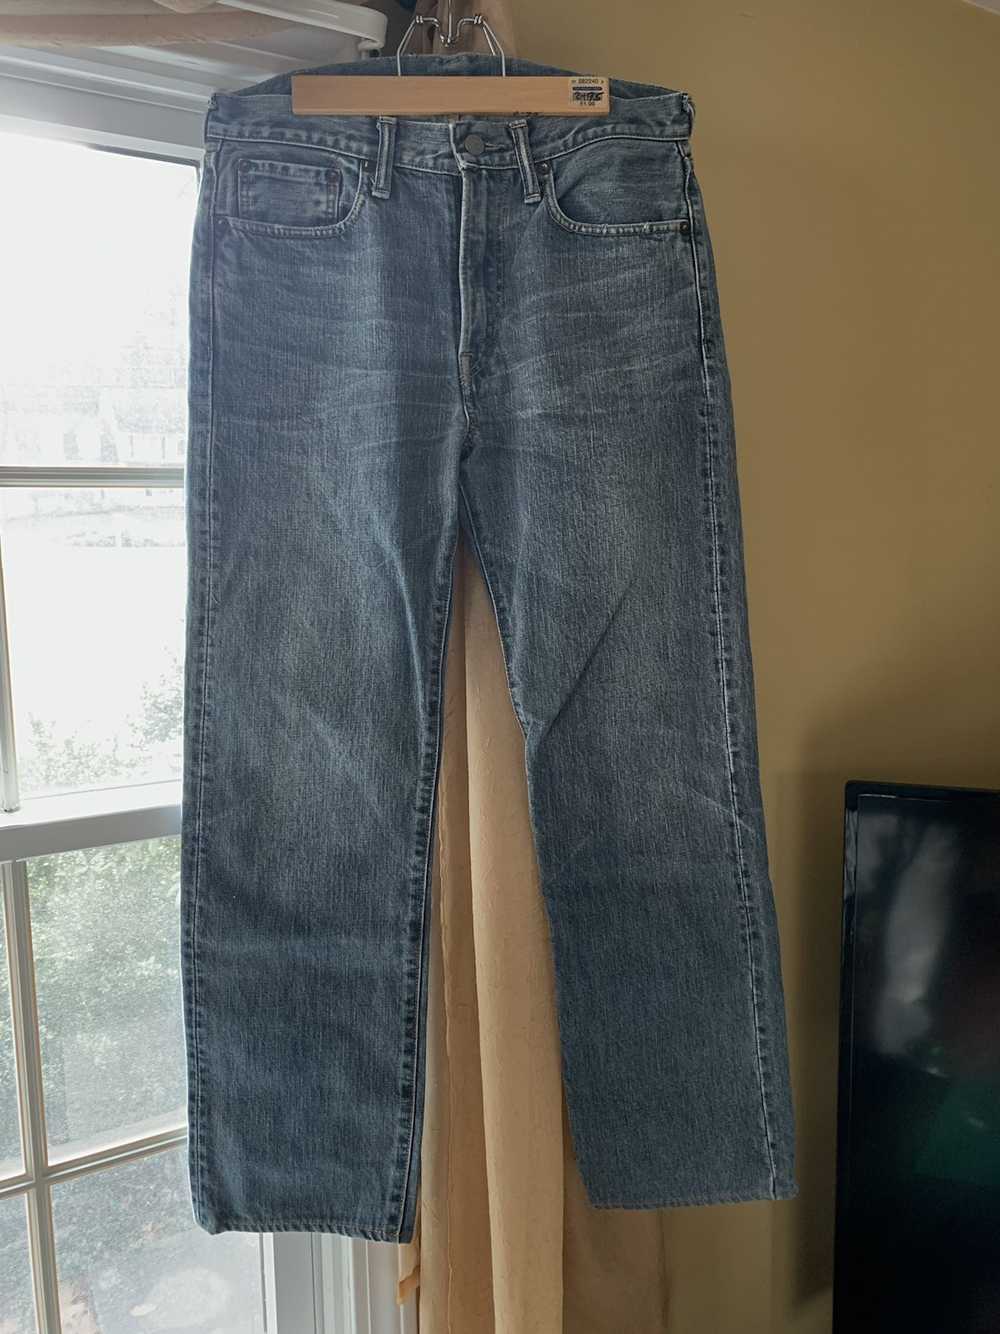 45rpm 45rpm Indigo Jeans - image 1